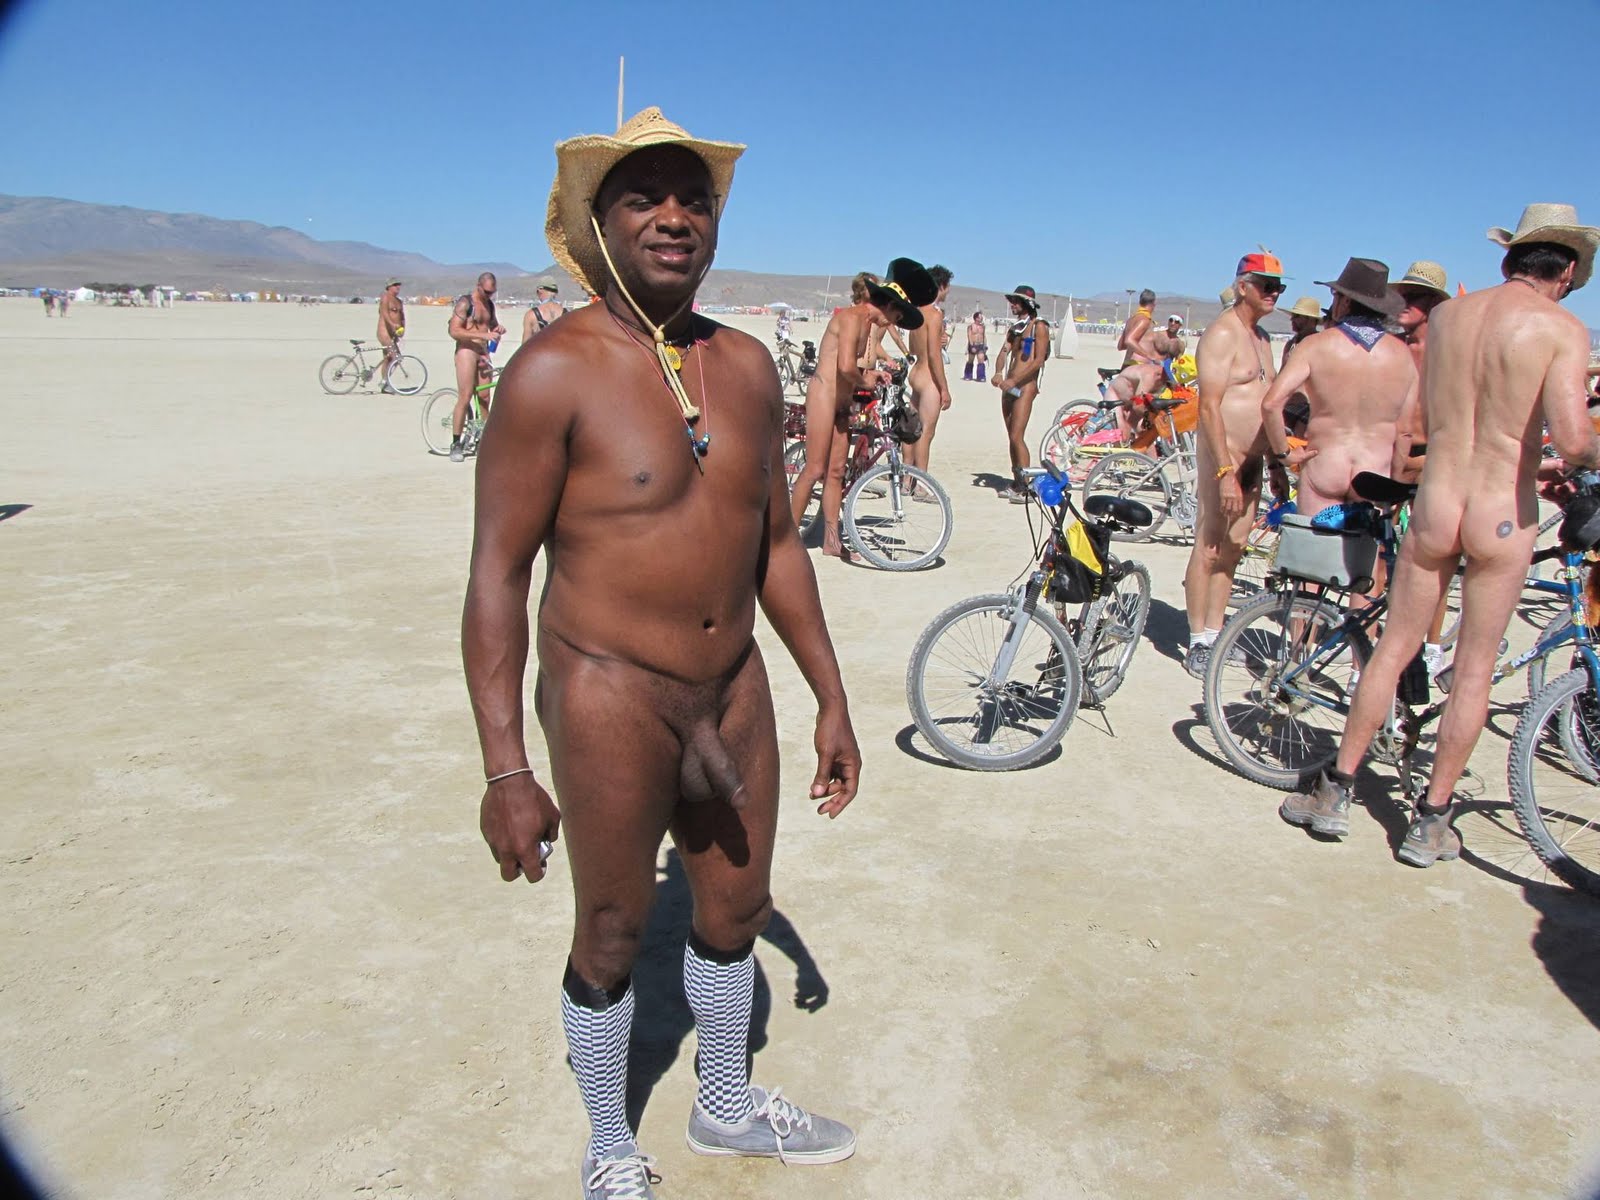 Nude on a bike at Burning Man. - nudeshots